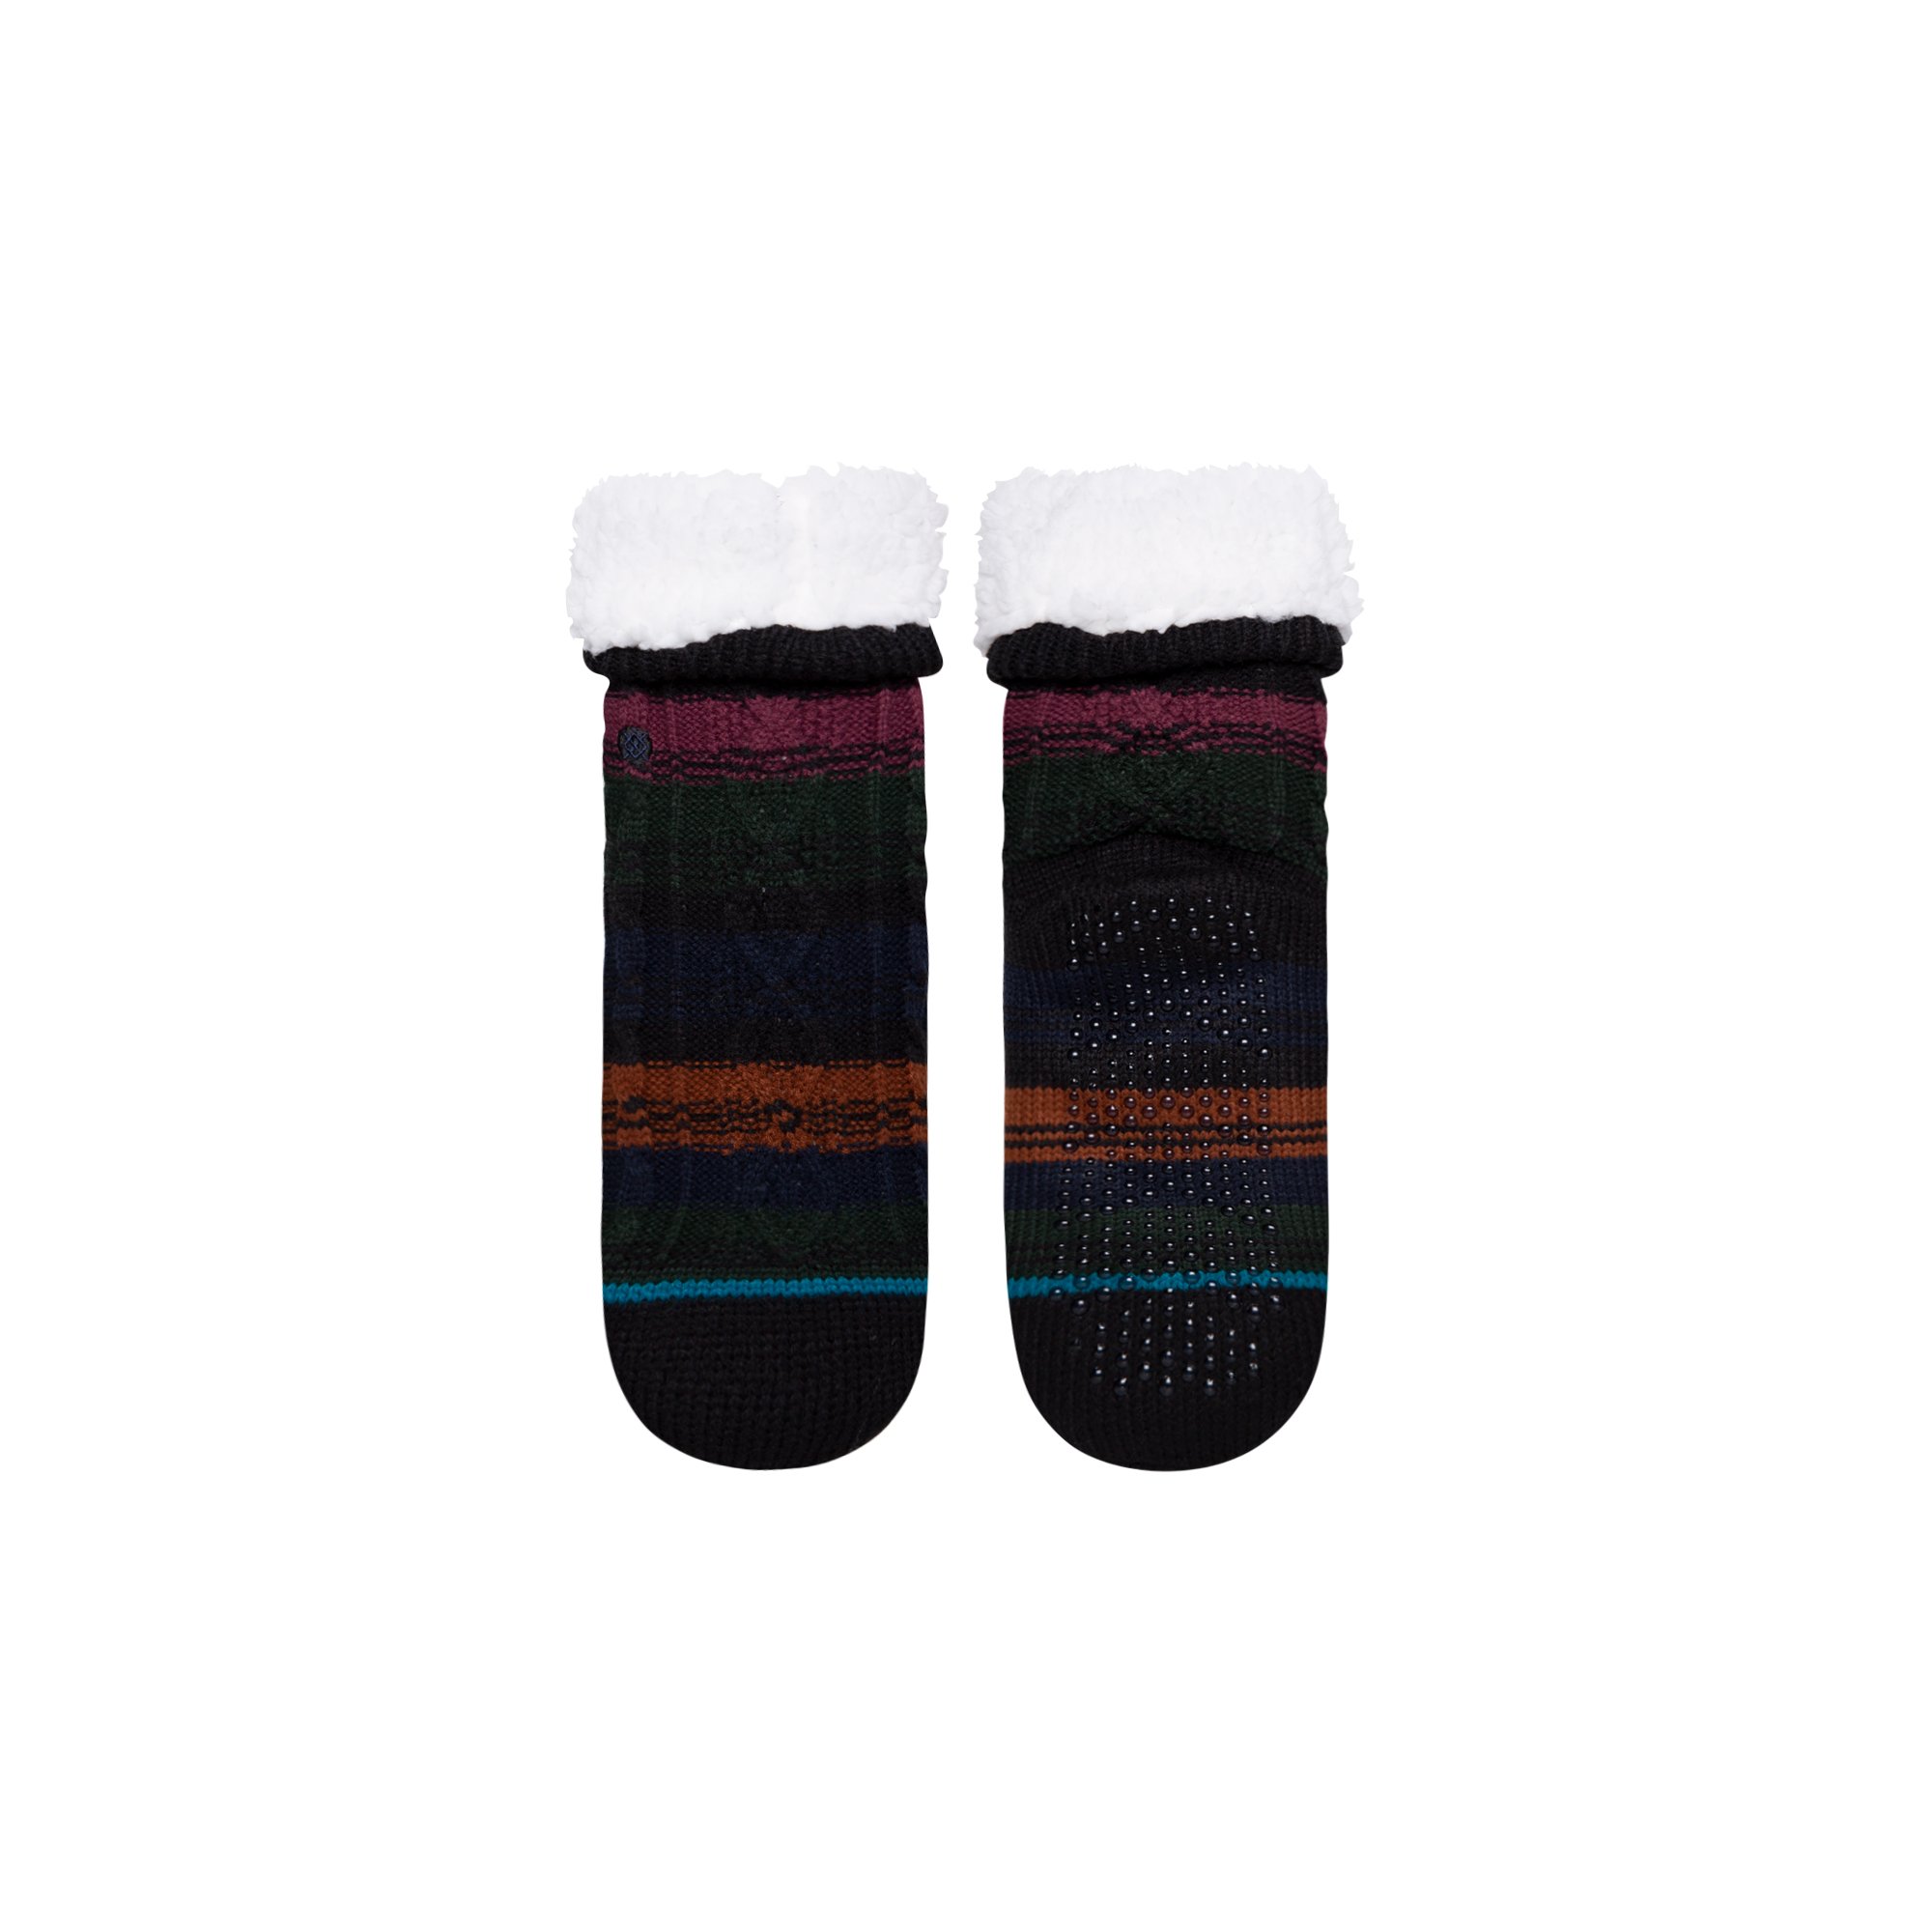 Gaiam Toeless Yoga Socks All Grip No Slip One Size Fits Most 2 Pack Black